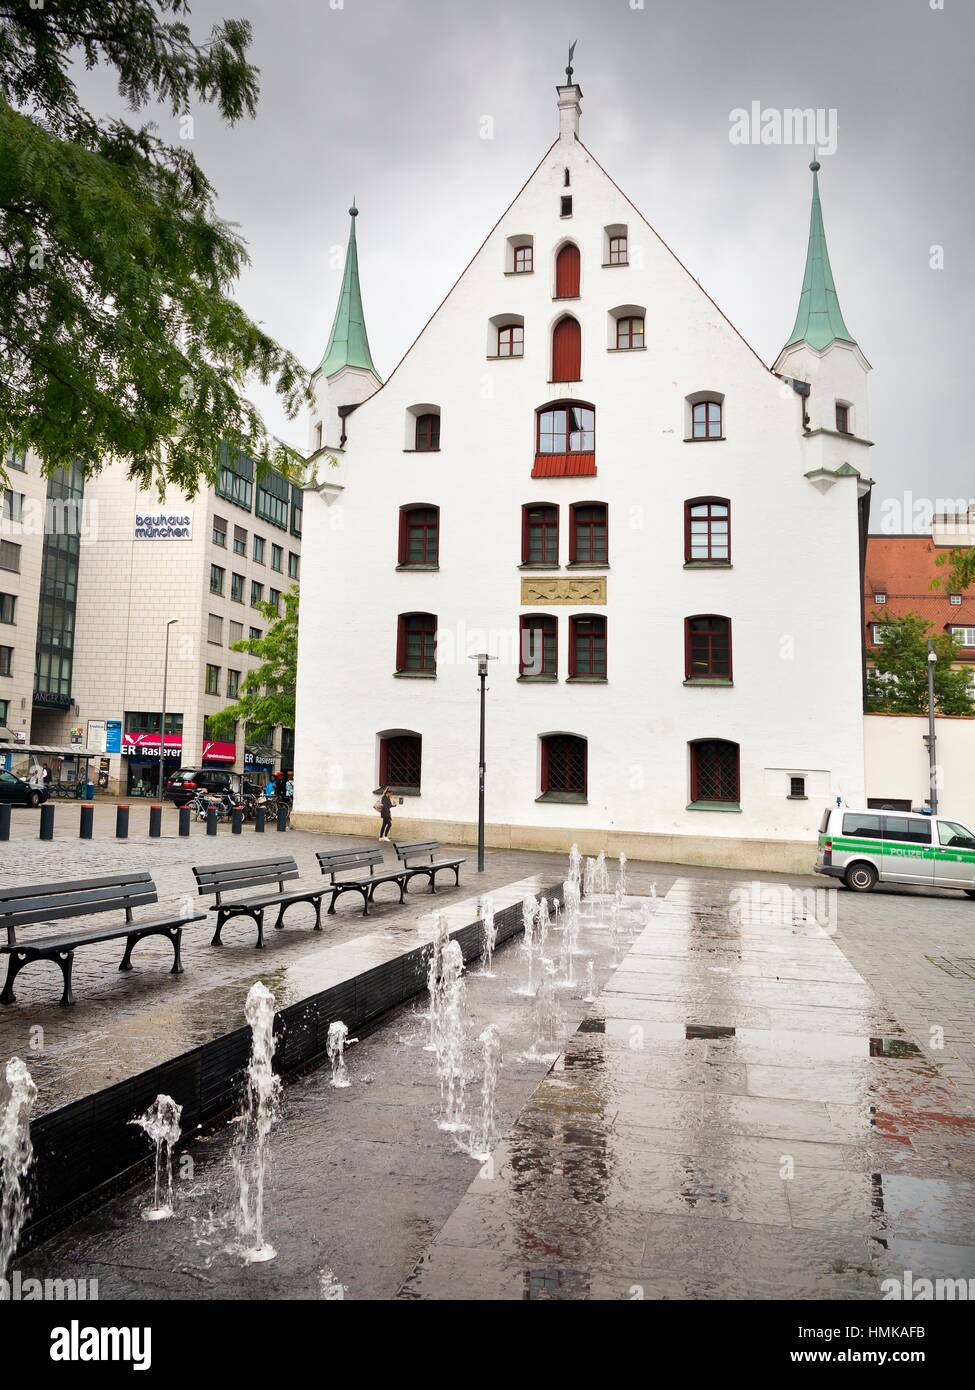 Museum of the City. St. Jakobs platz. Munich. Germany. Europe Stock Photo -  Alamy